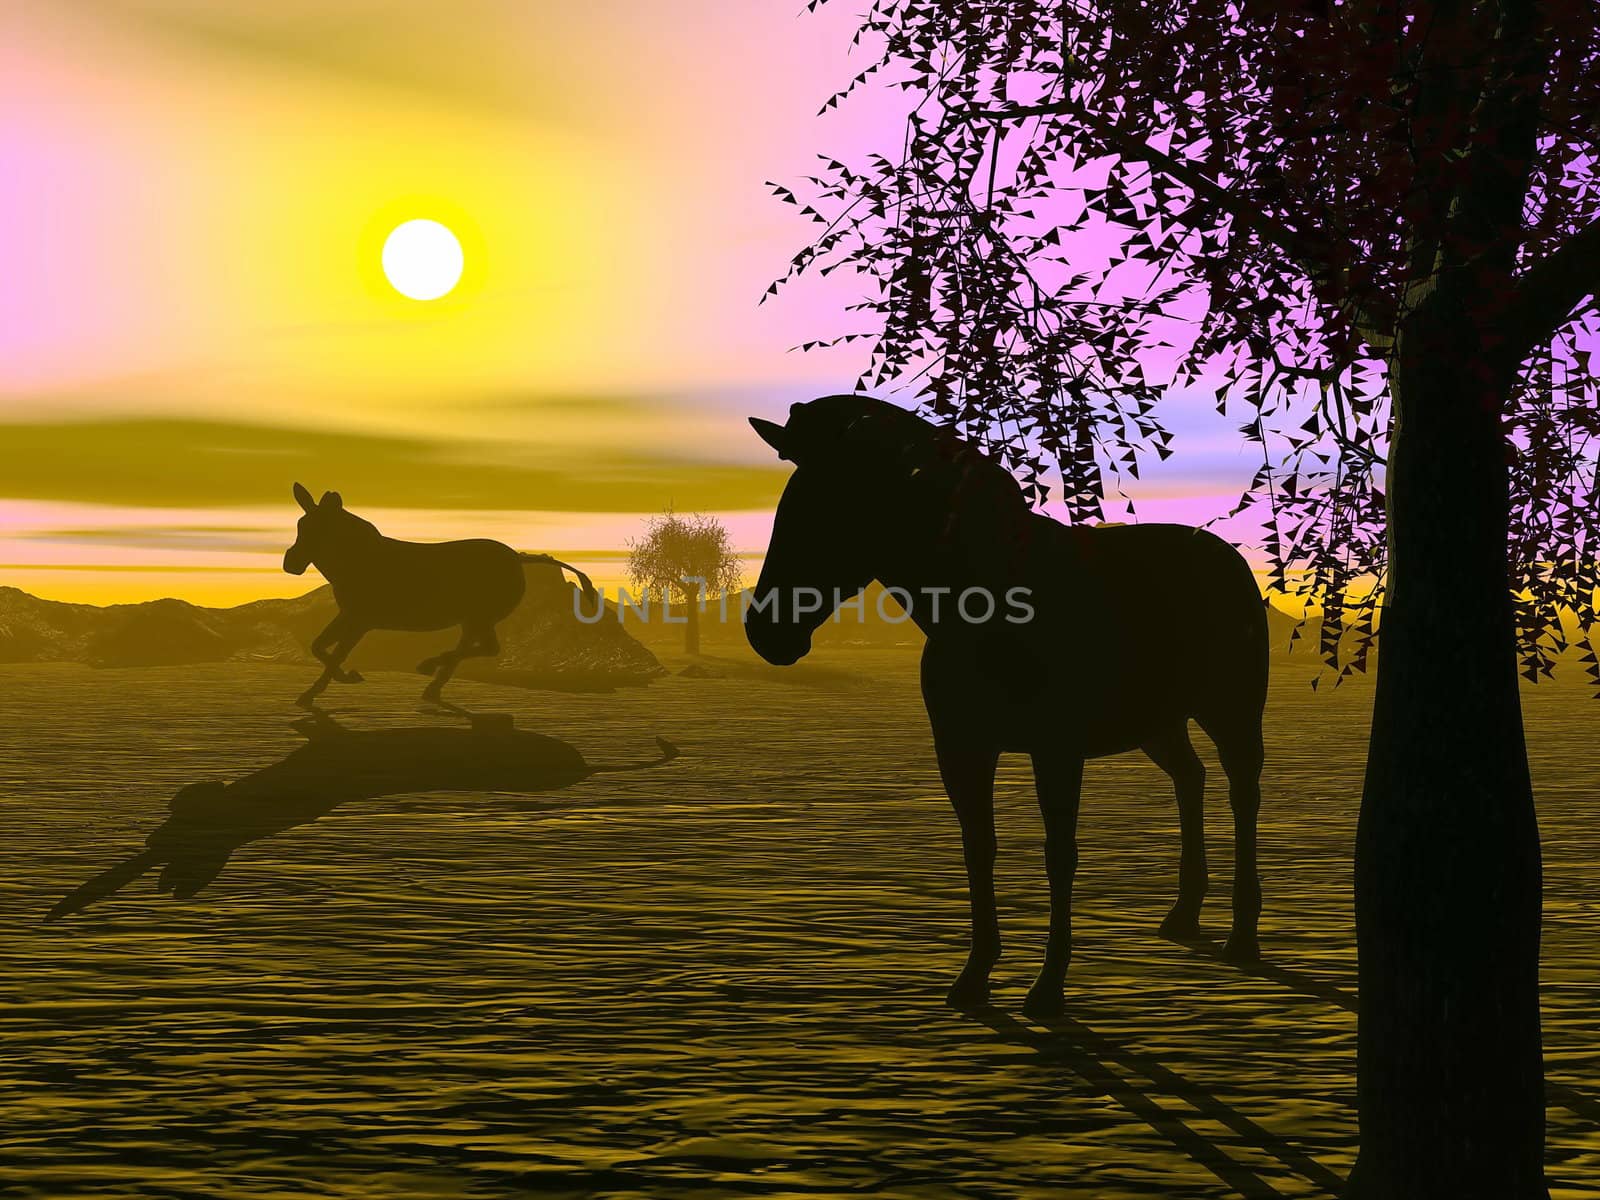 Zebras by sunset - 3D render by Elenaphotos21